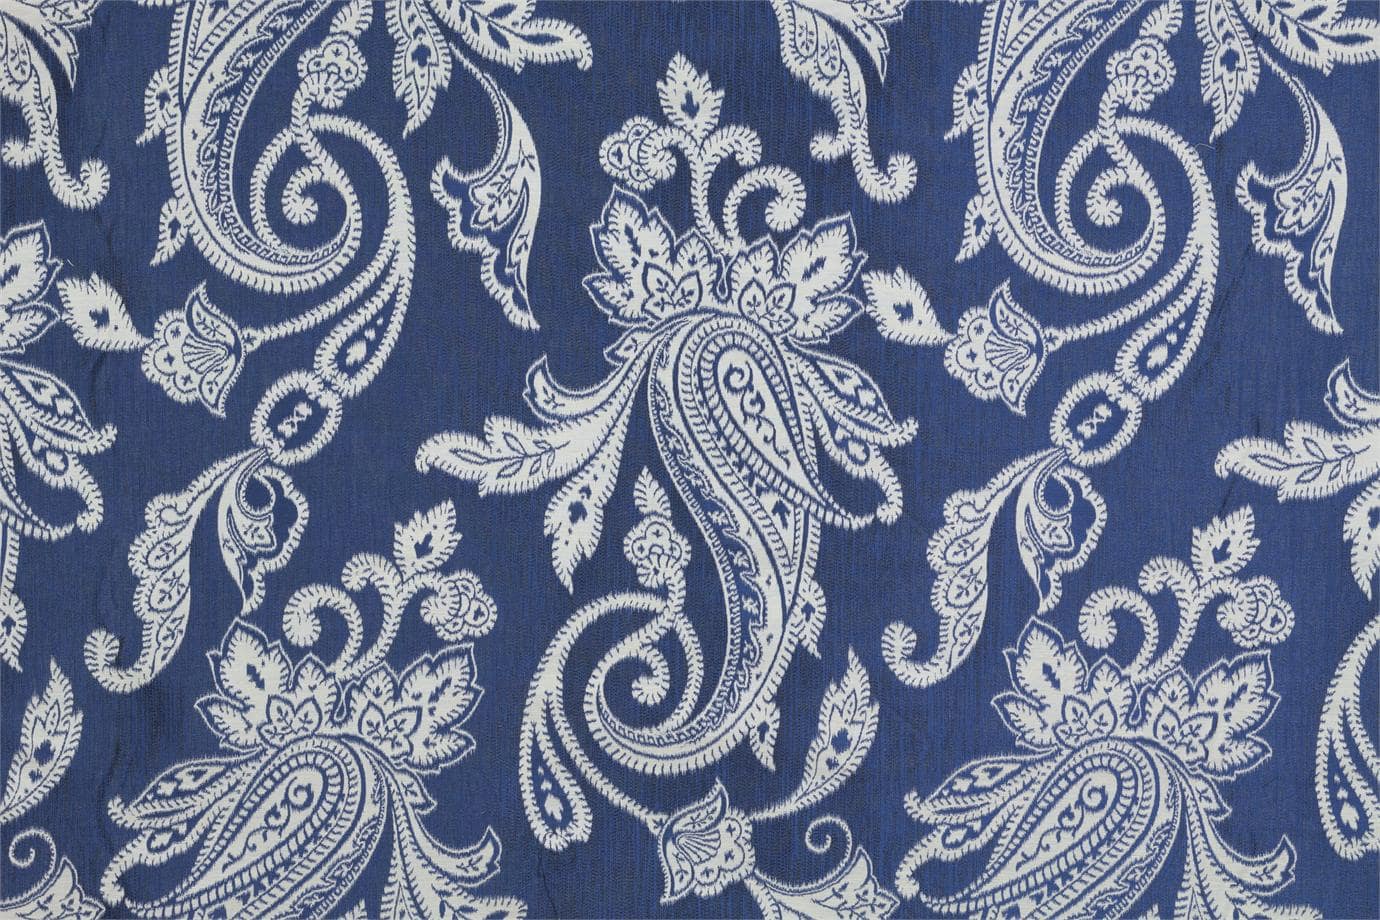 AK0744 BOSFORO 031 Blu cina home decoration fabric